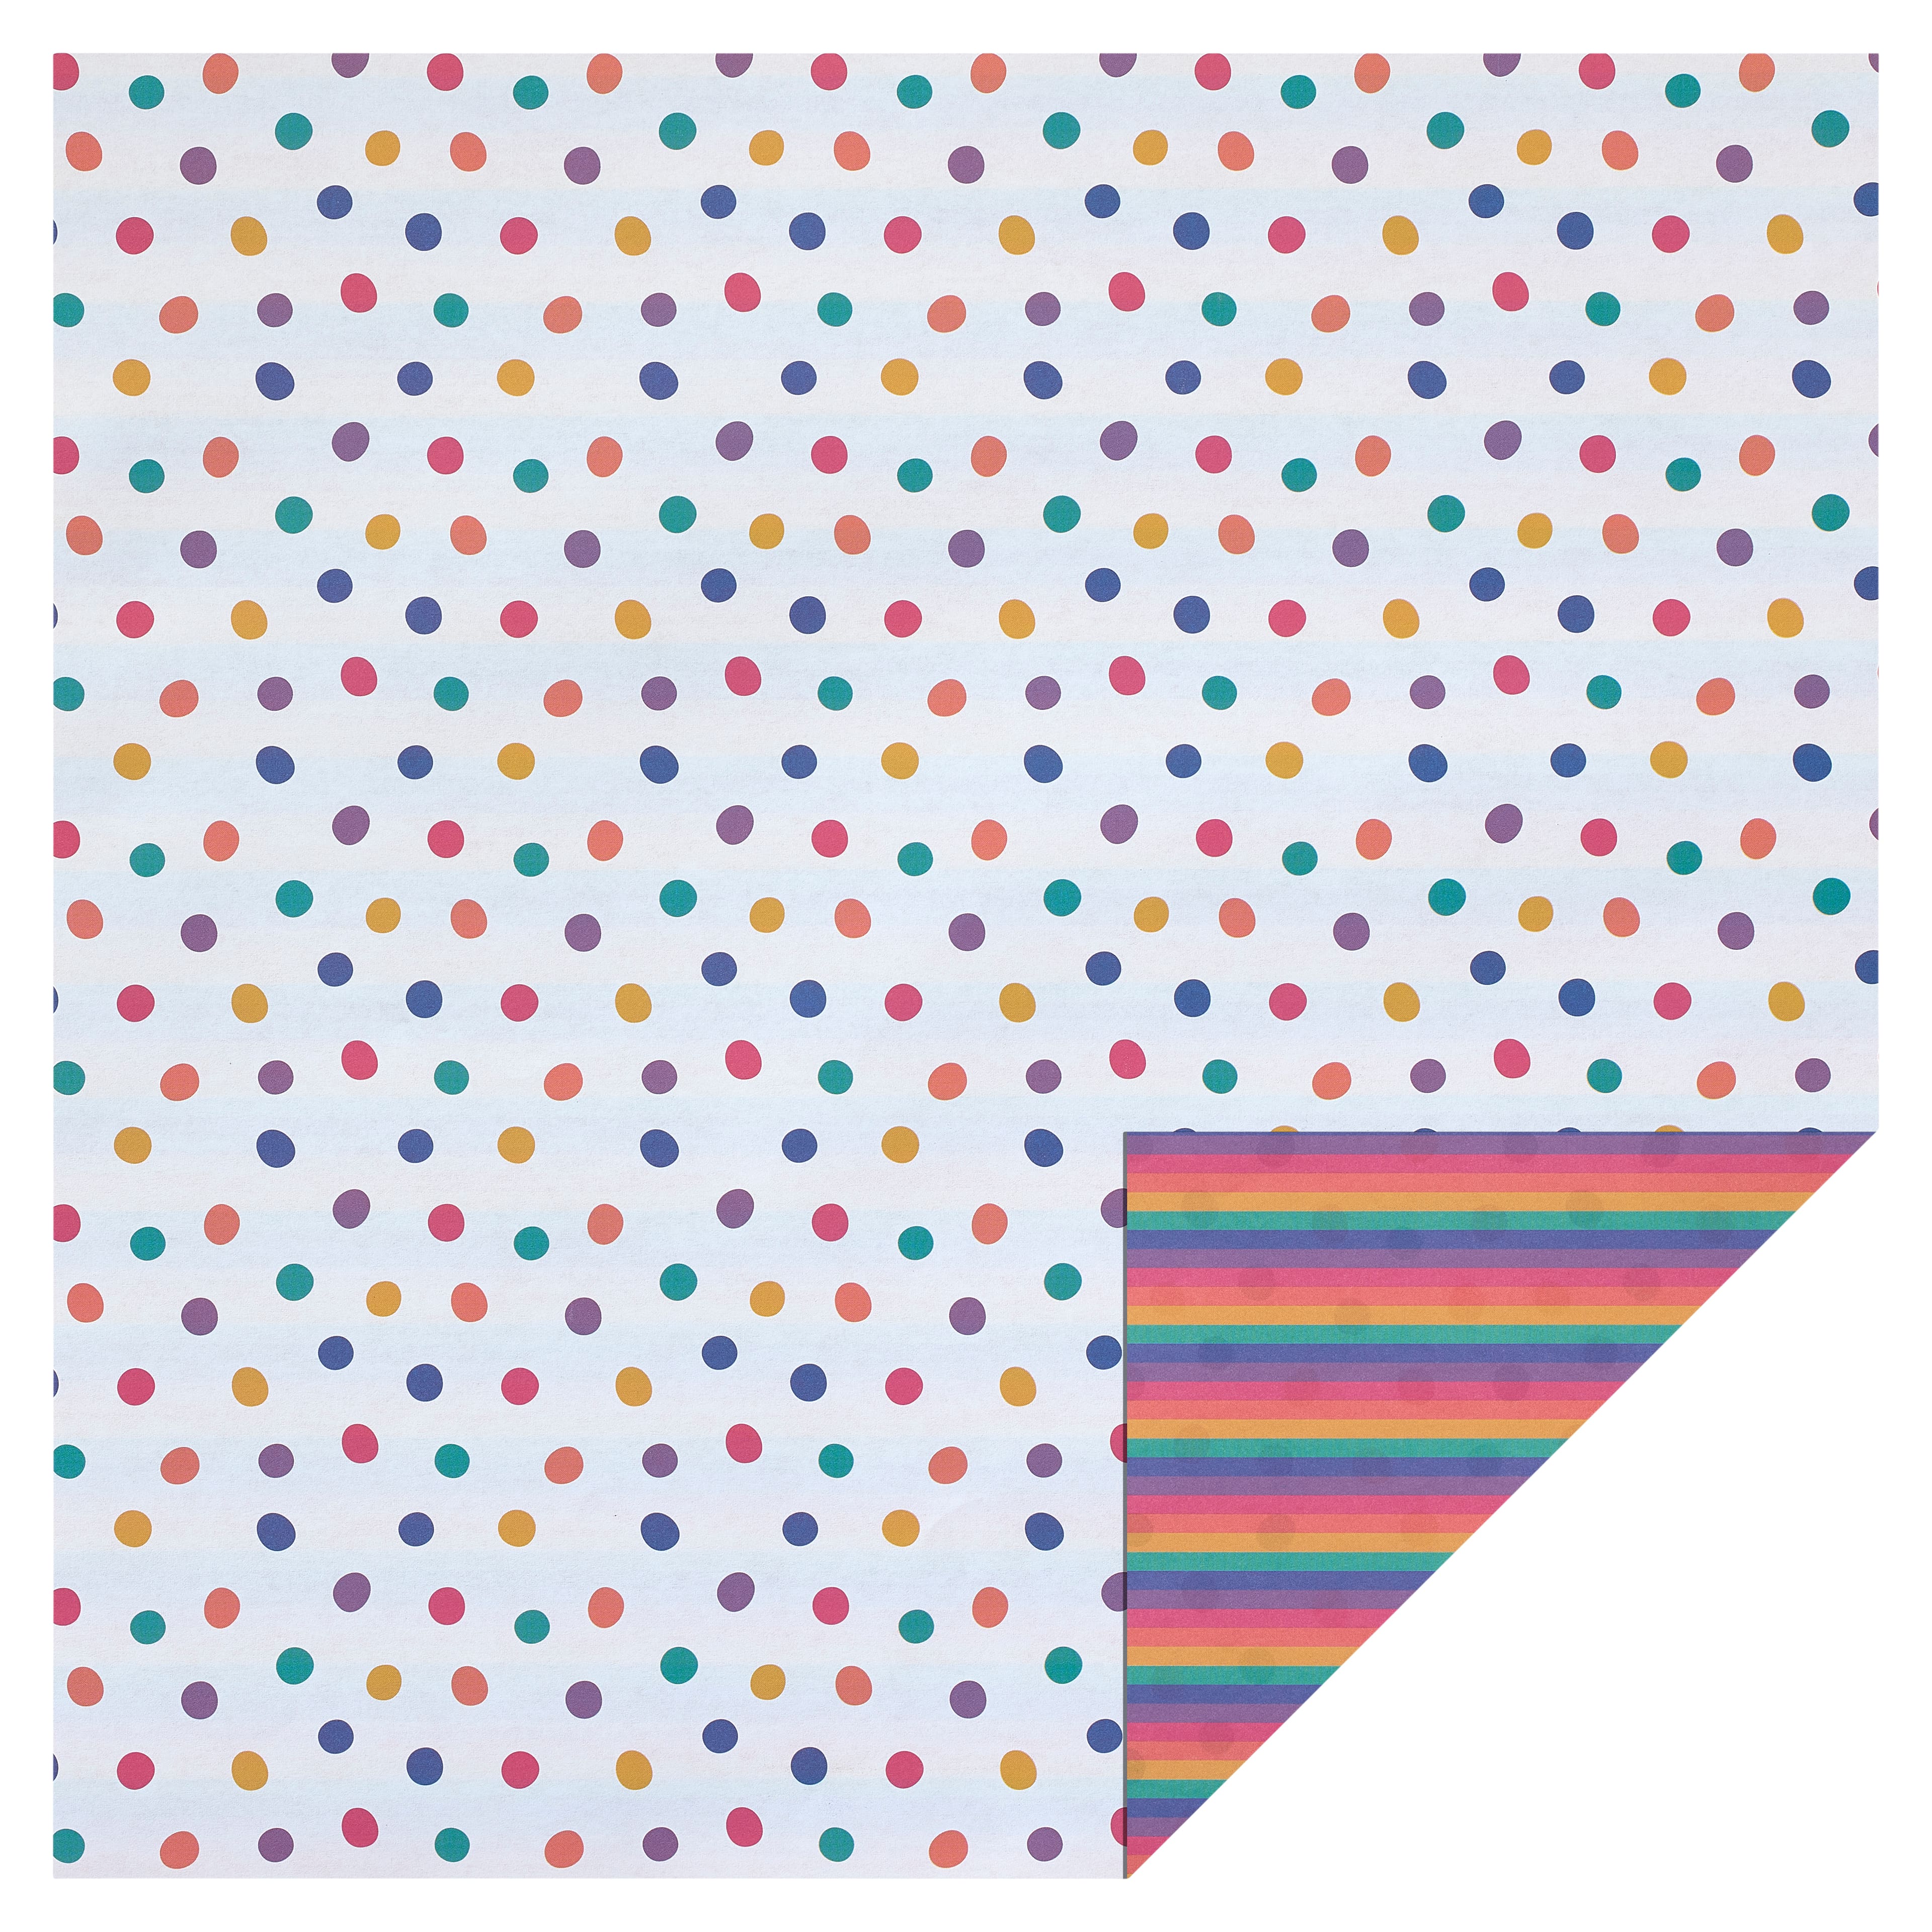 Zilue 25pcs/pack Colorful Chevron Striped Polka Dot Star Paper